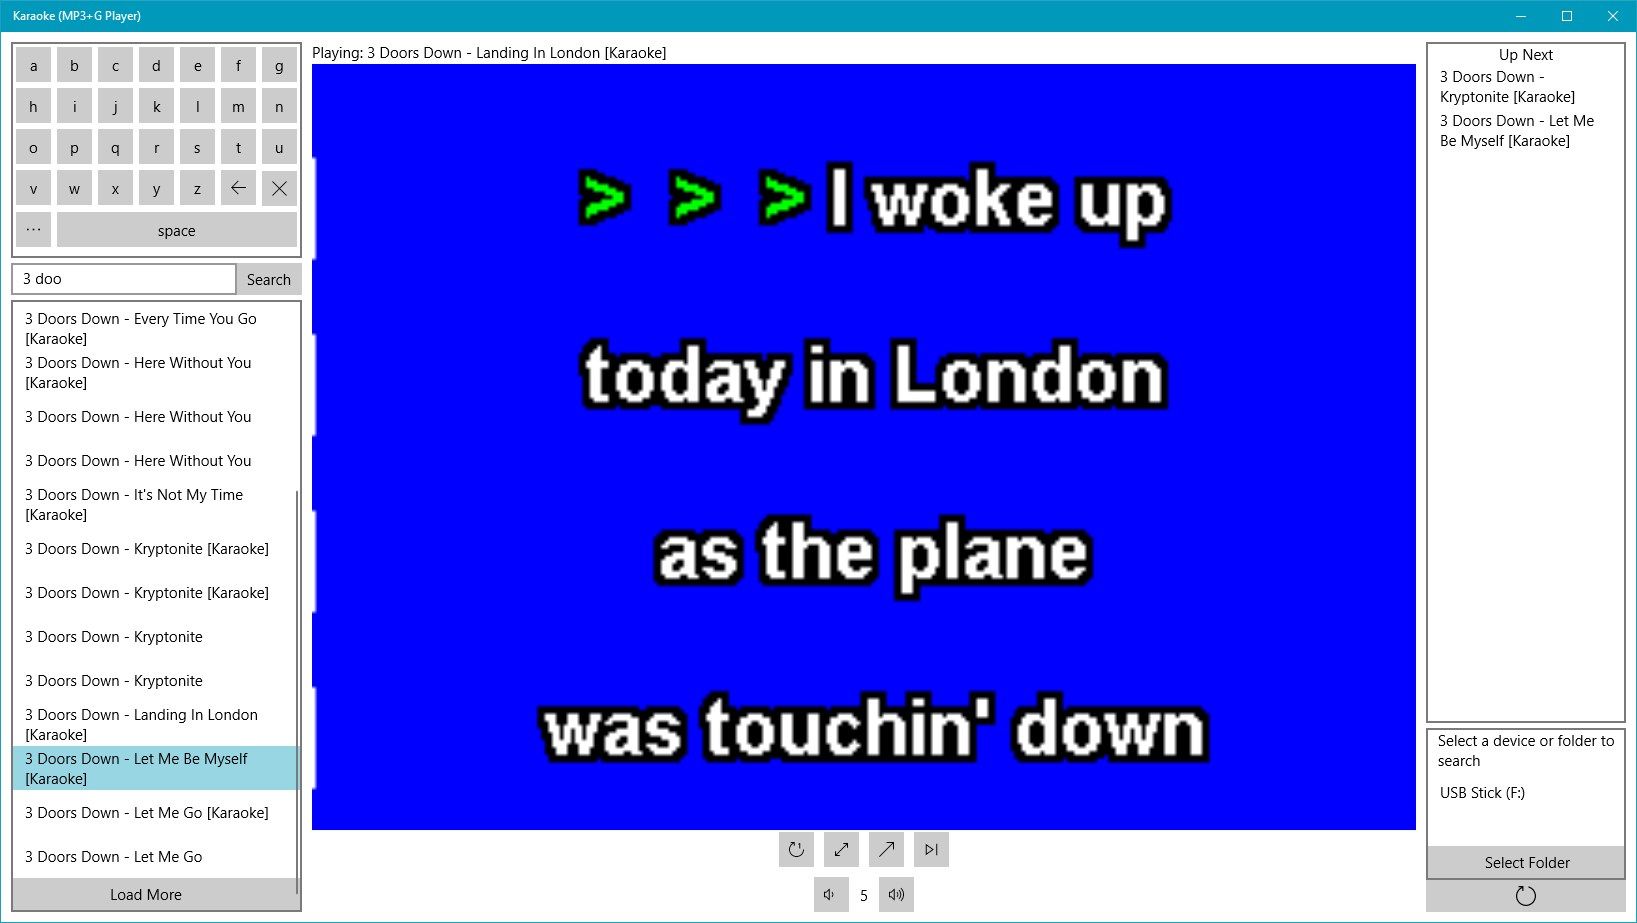 Main App Screen - Playing "Landing In London"